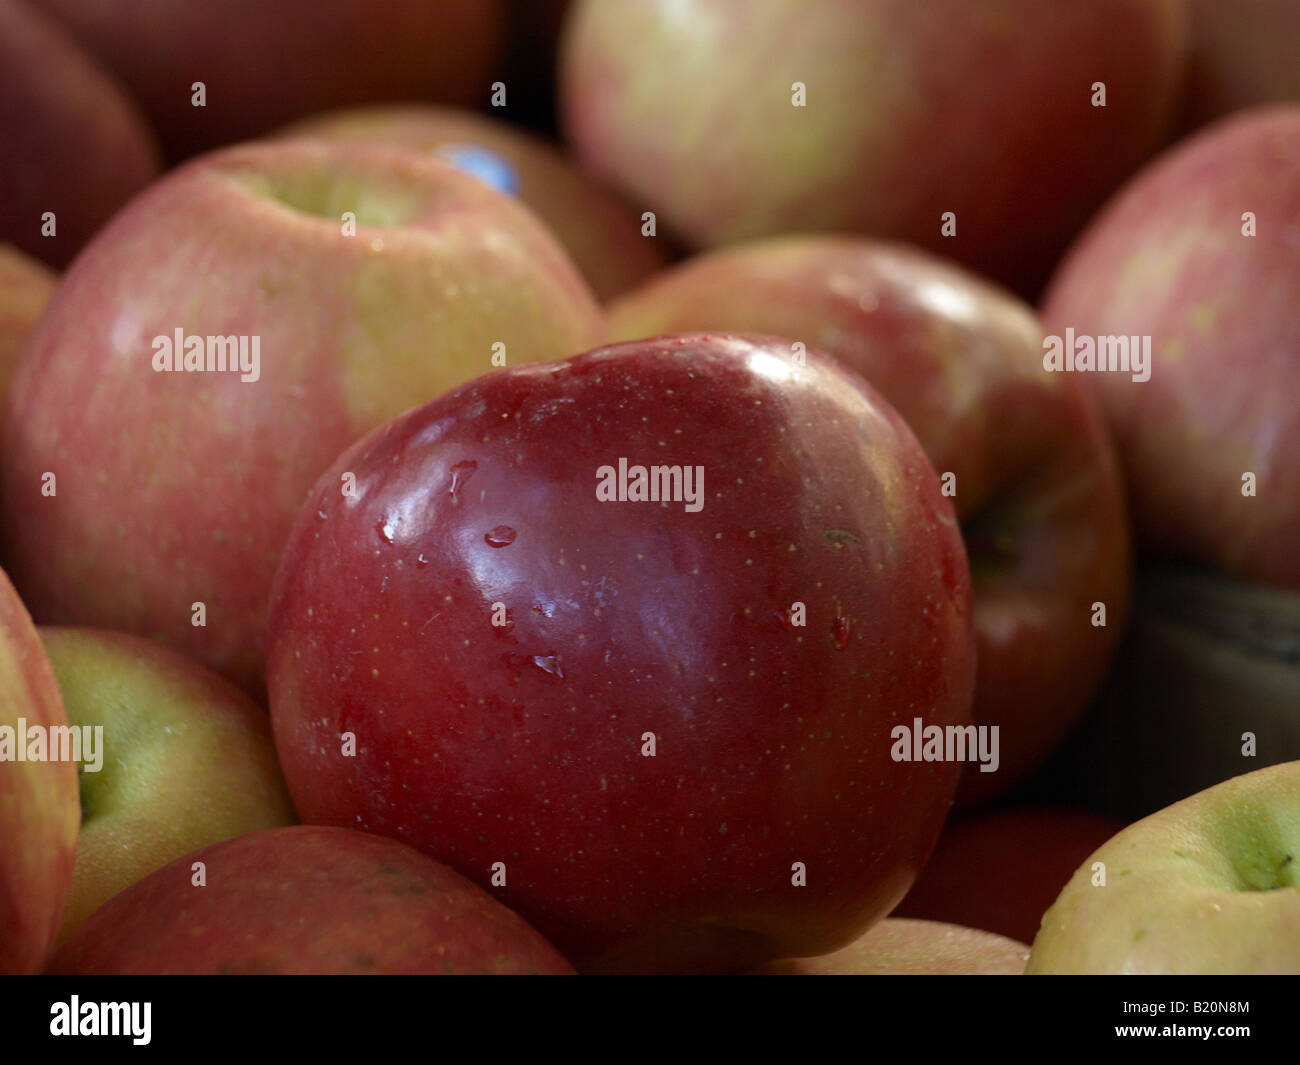 apples close-up Stock Photo